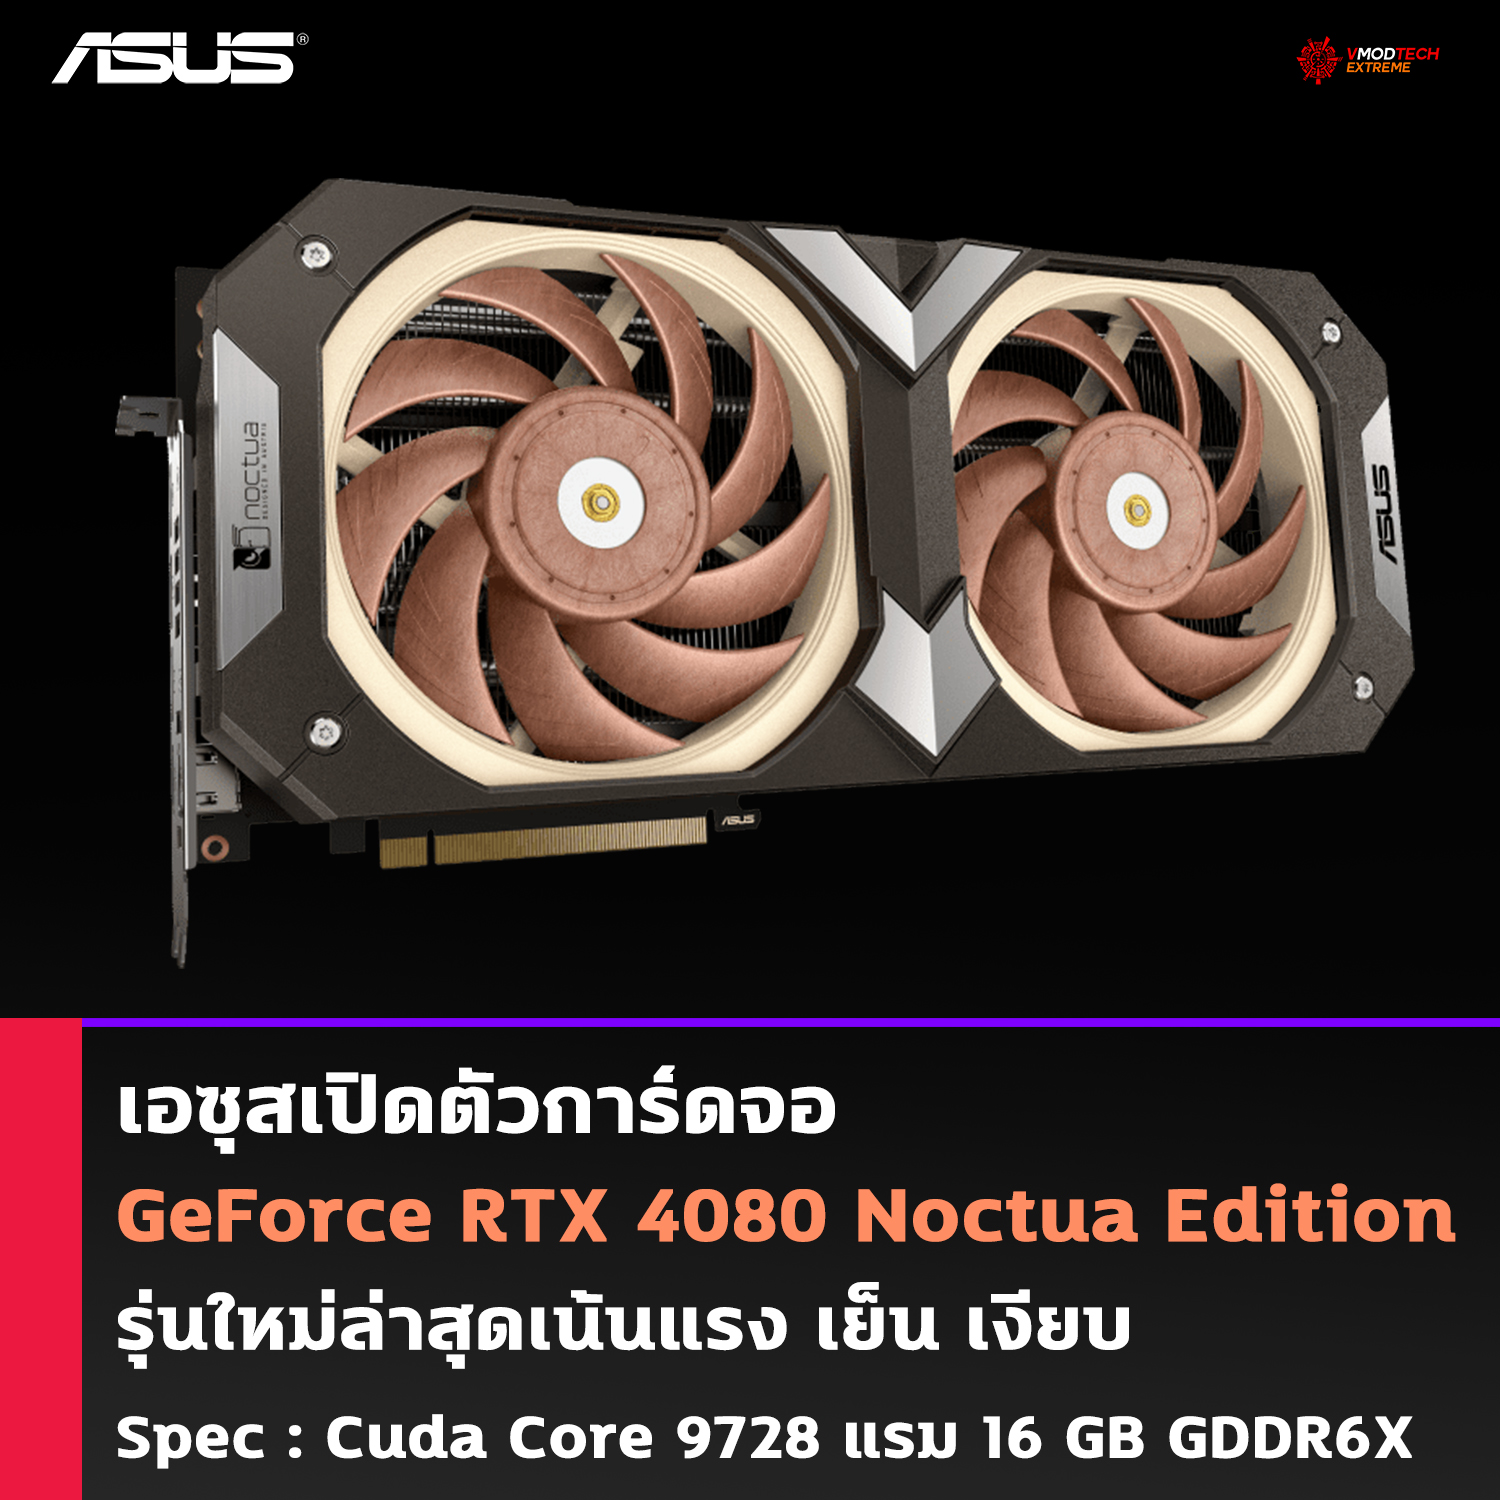 asus geforce rtx 4080 noctua edition เอซุสเปิดตัวการ์ดจอ ASUS GeForce RTX 4080 Noctua Edition รุ่นใหม่ล่าสุดเน้นแรง เย็น เงียบ 